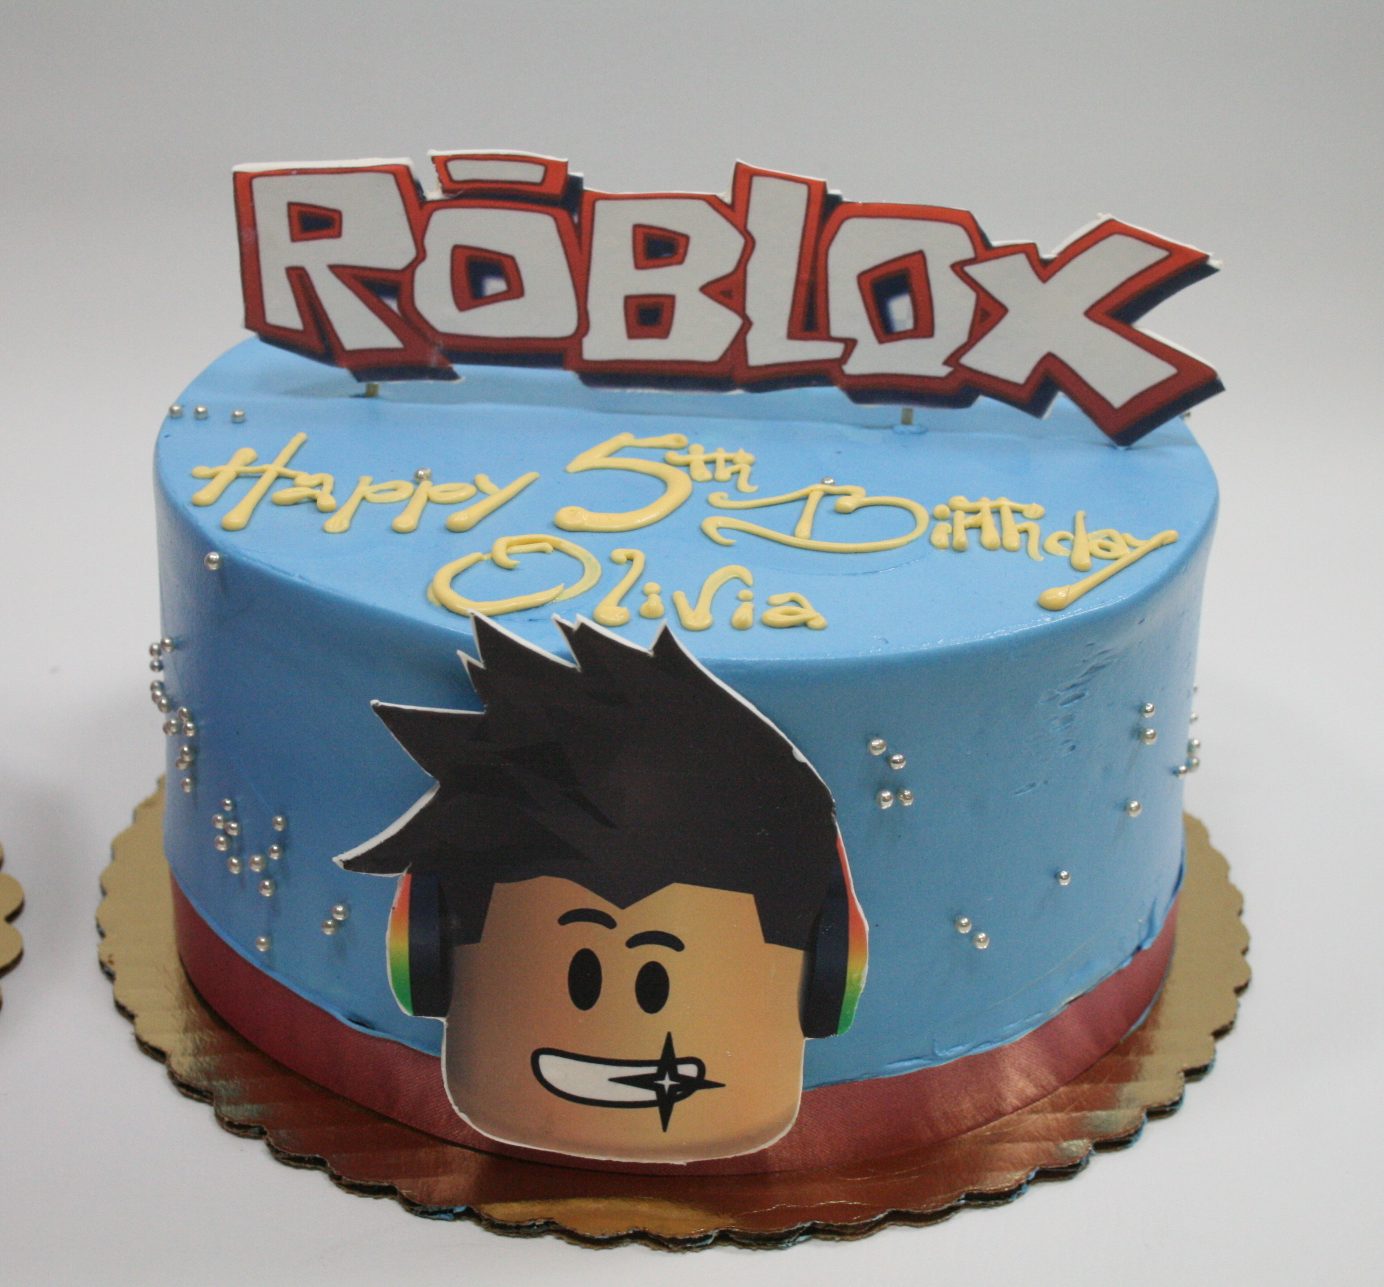 Roblox Cake » Once Upon A Cake